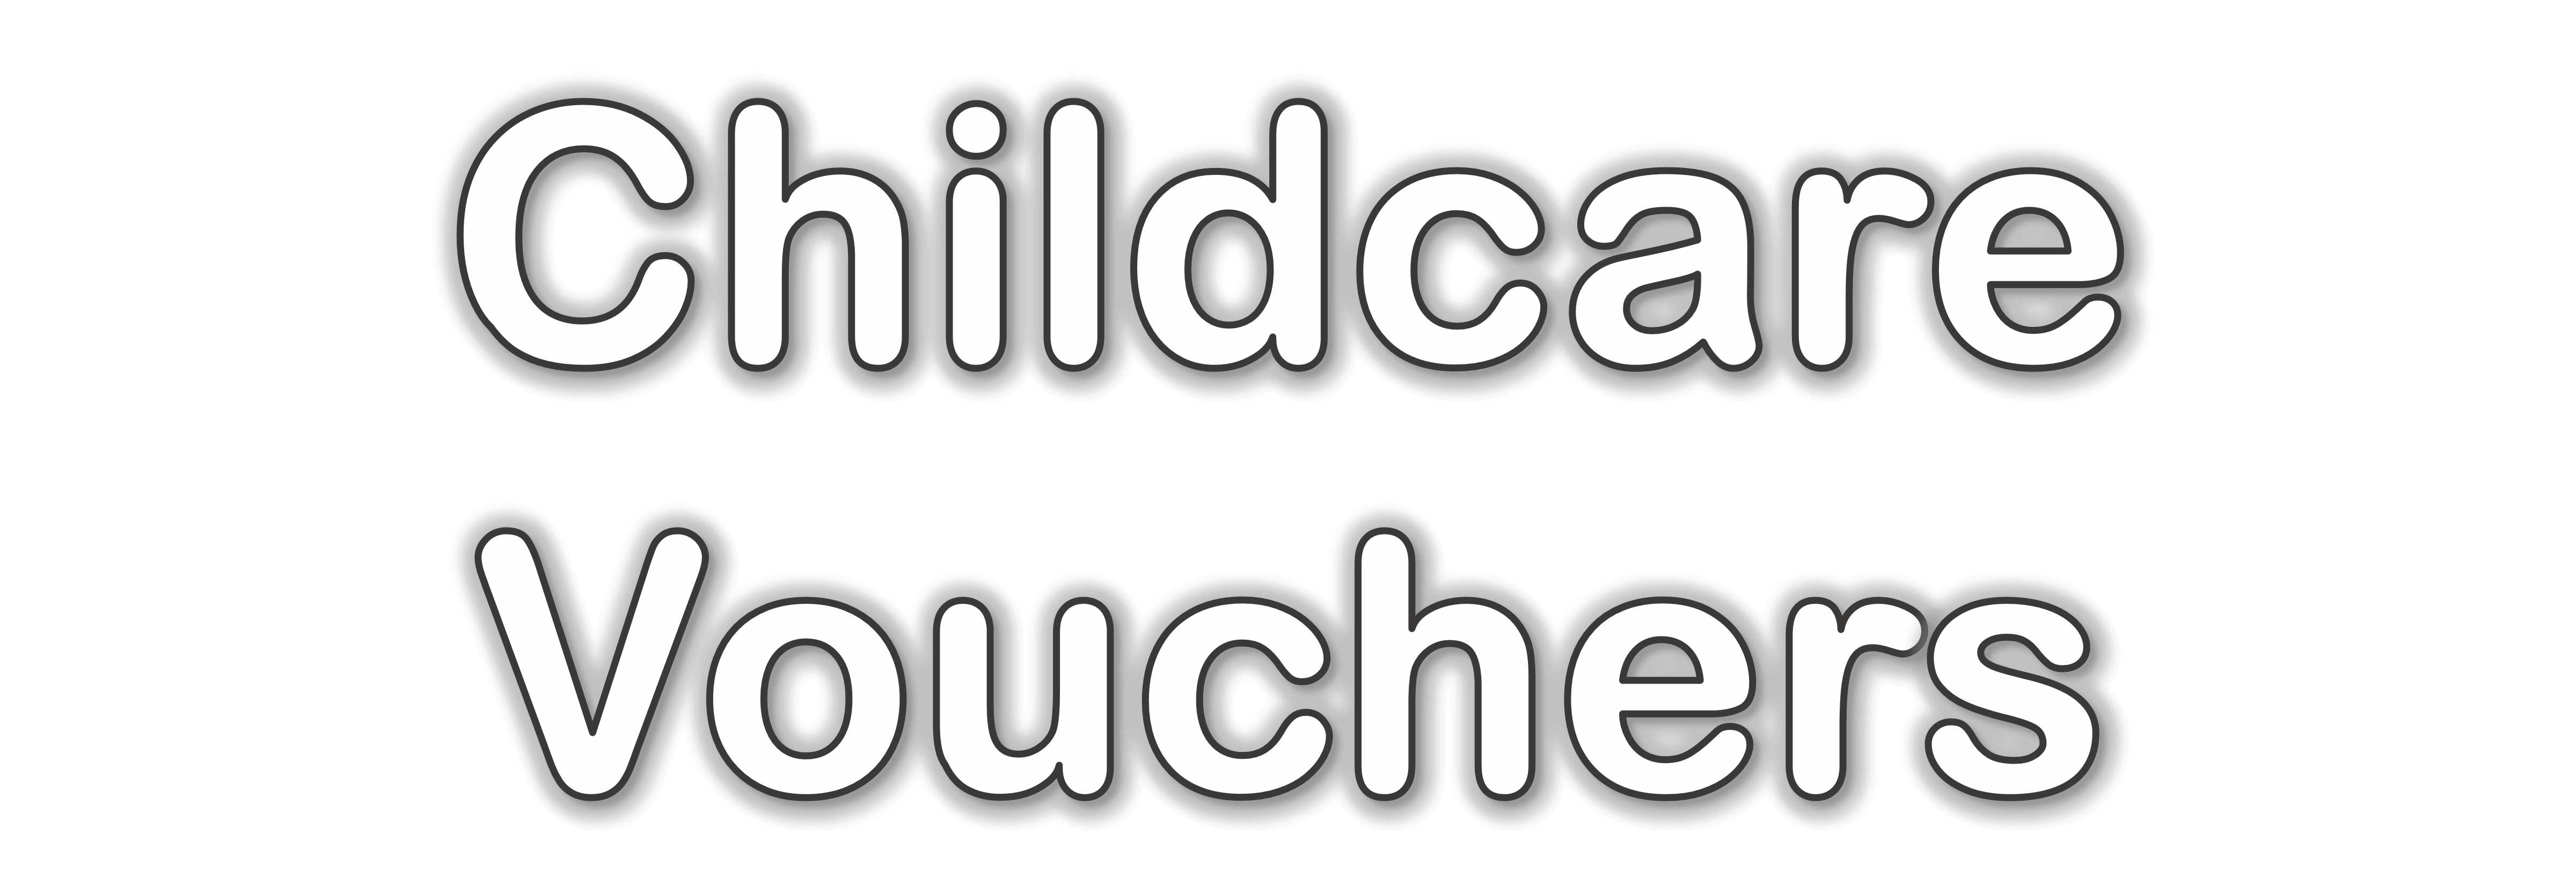 Sodexo Childcare Vouchers logo